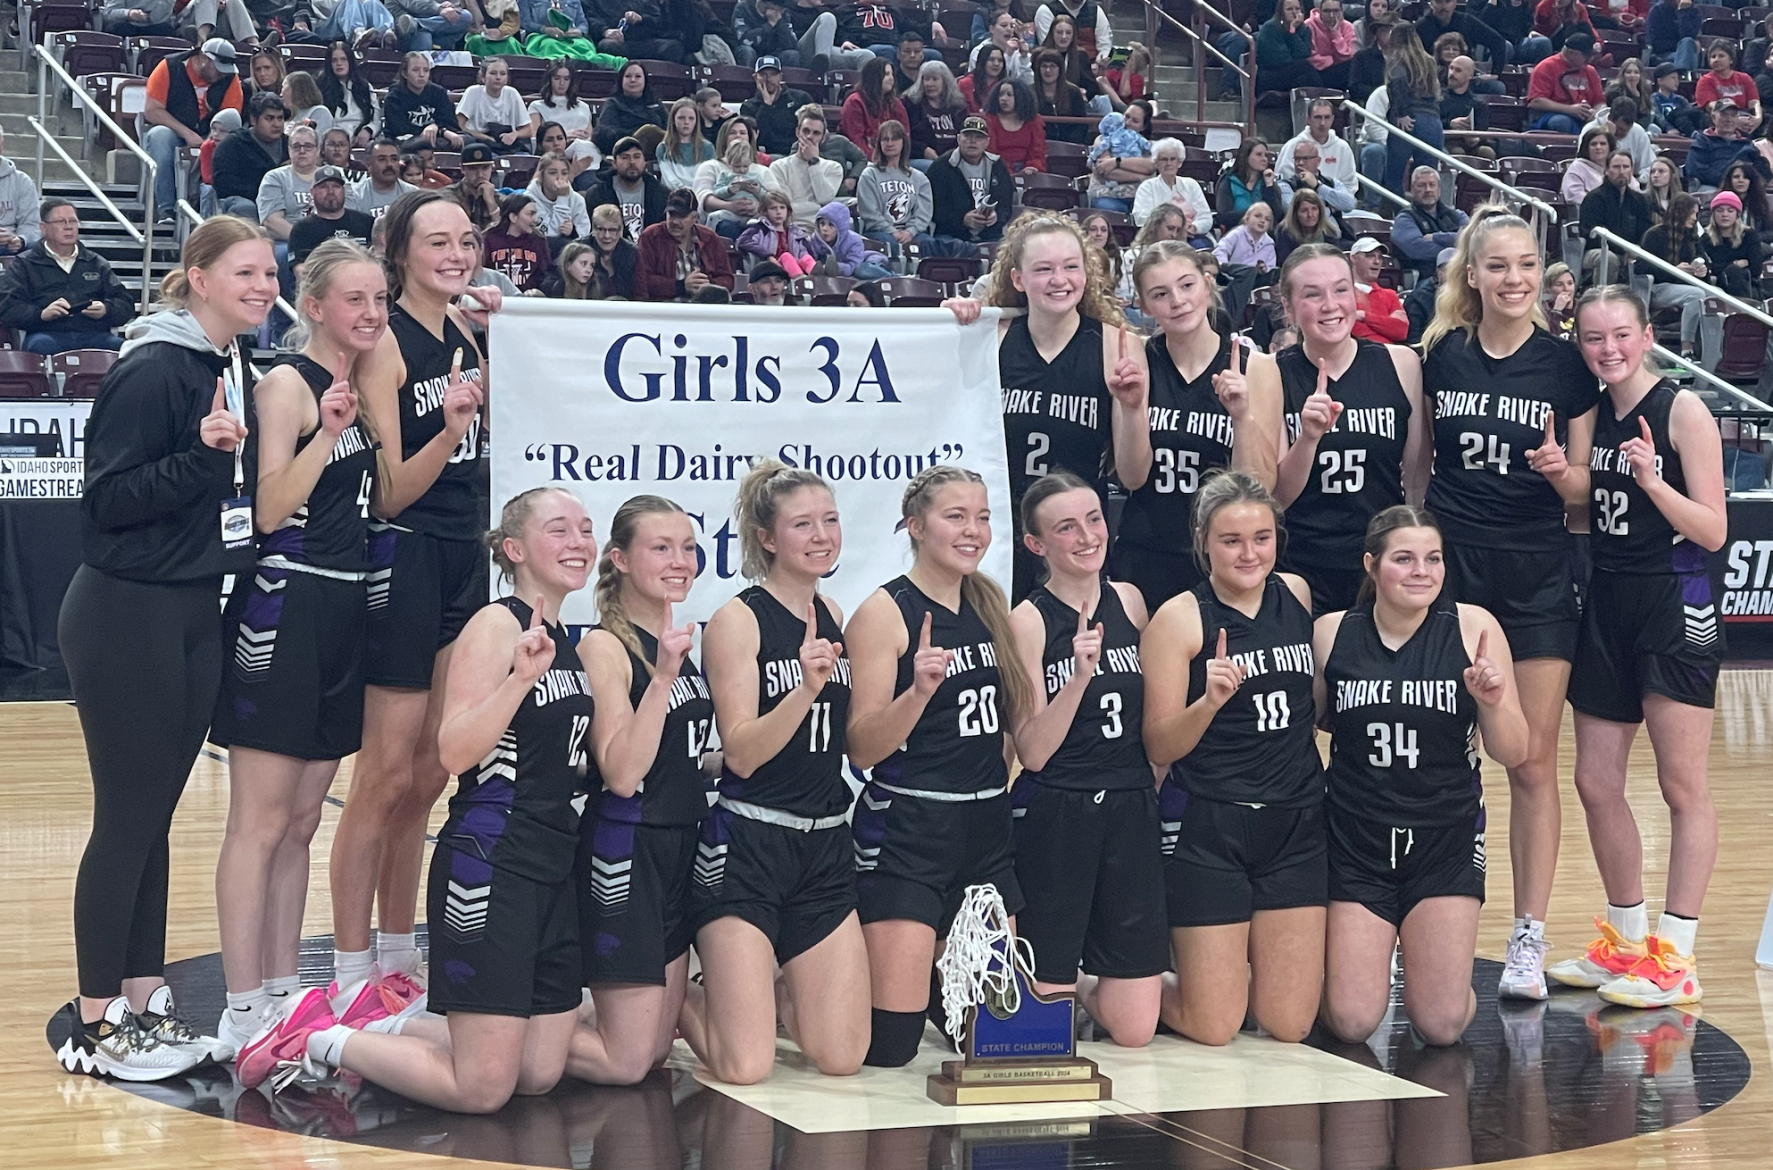 3 Idaho Girls Basketball Teams Secure State Titles